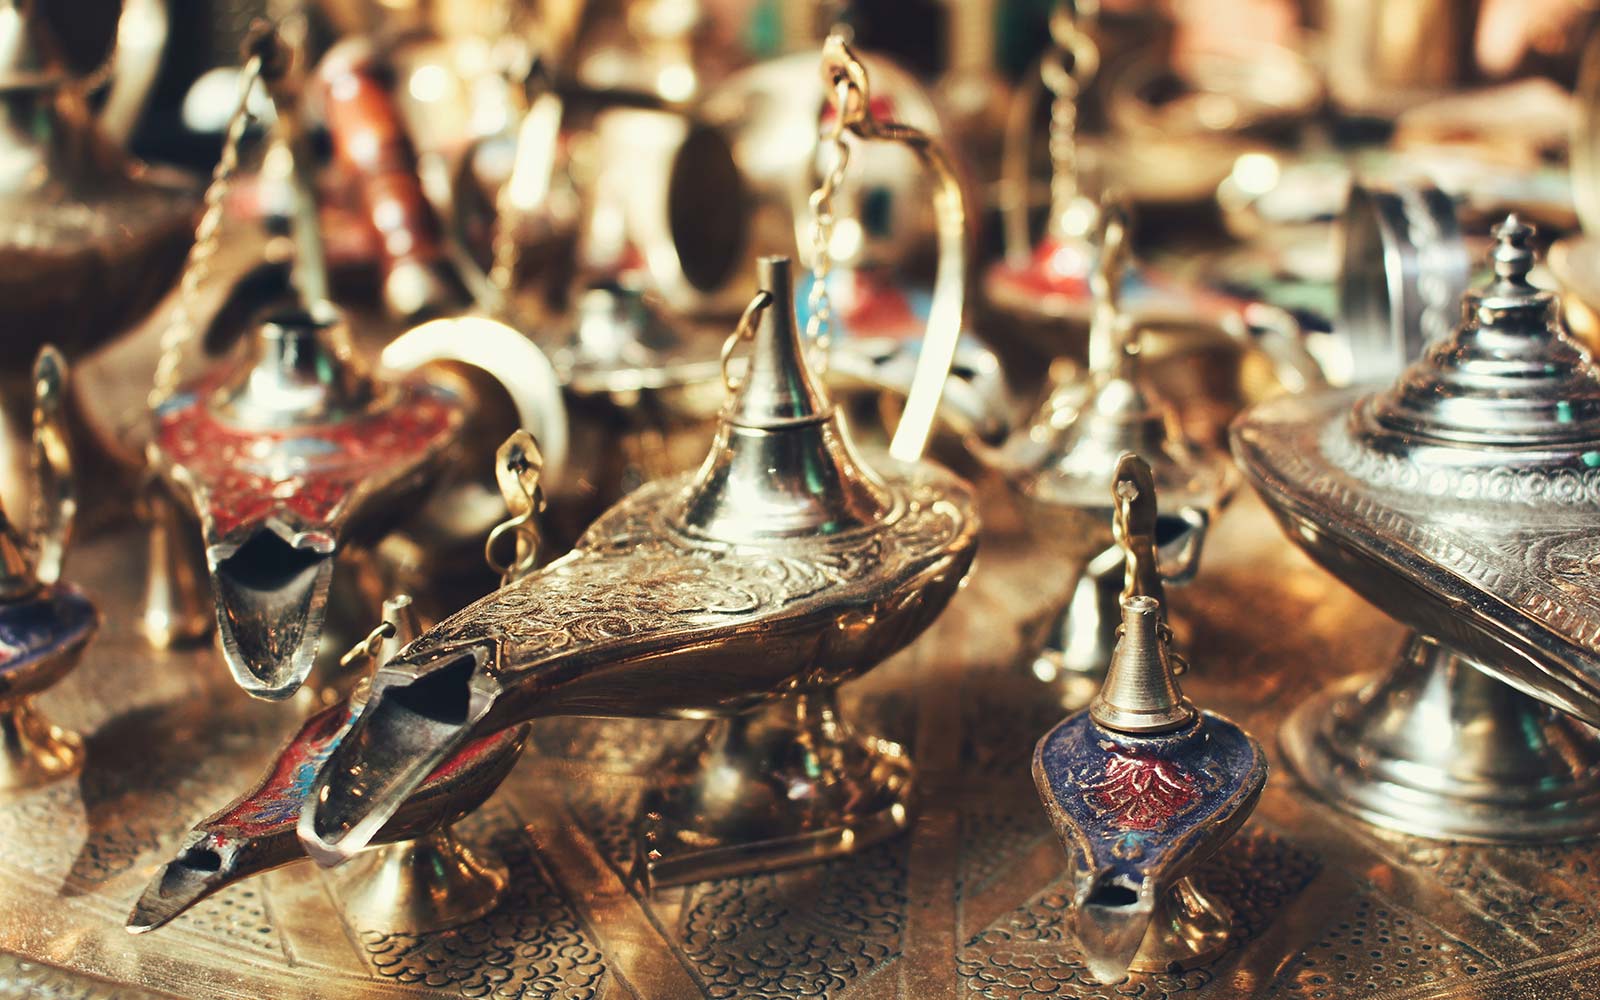 Лампы Алладина на рынке города Марракеш